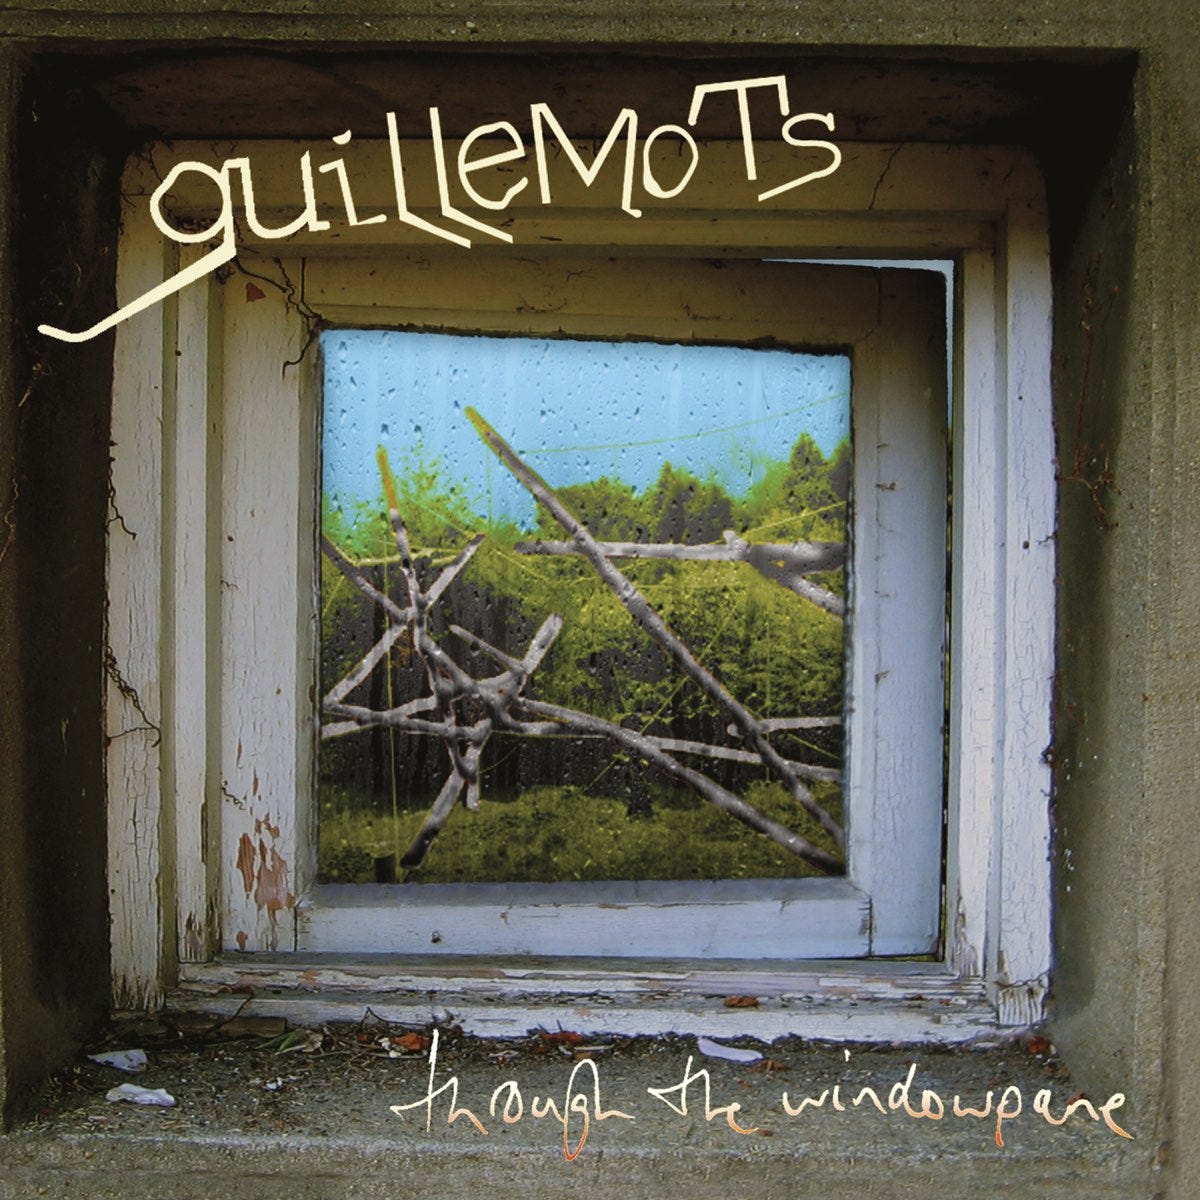 Through The Windowpane - Album by Guillemots - Apple Music